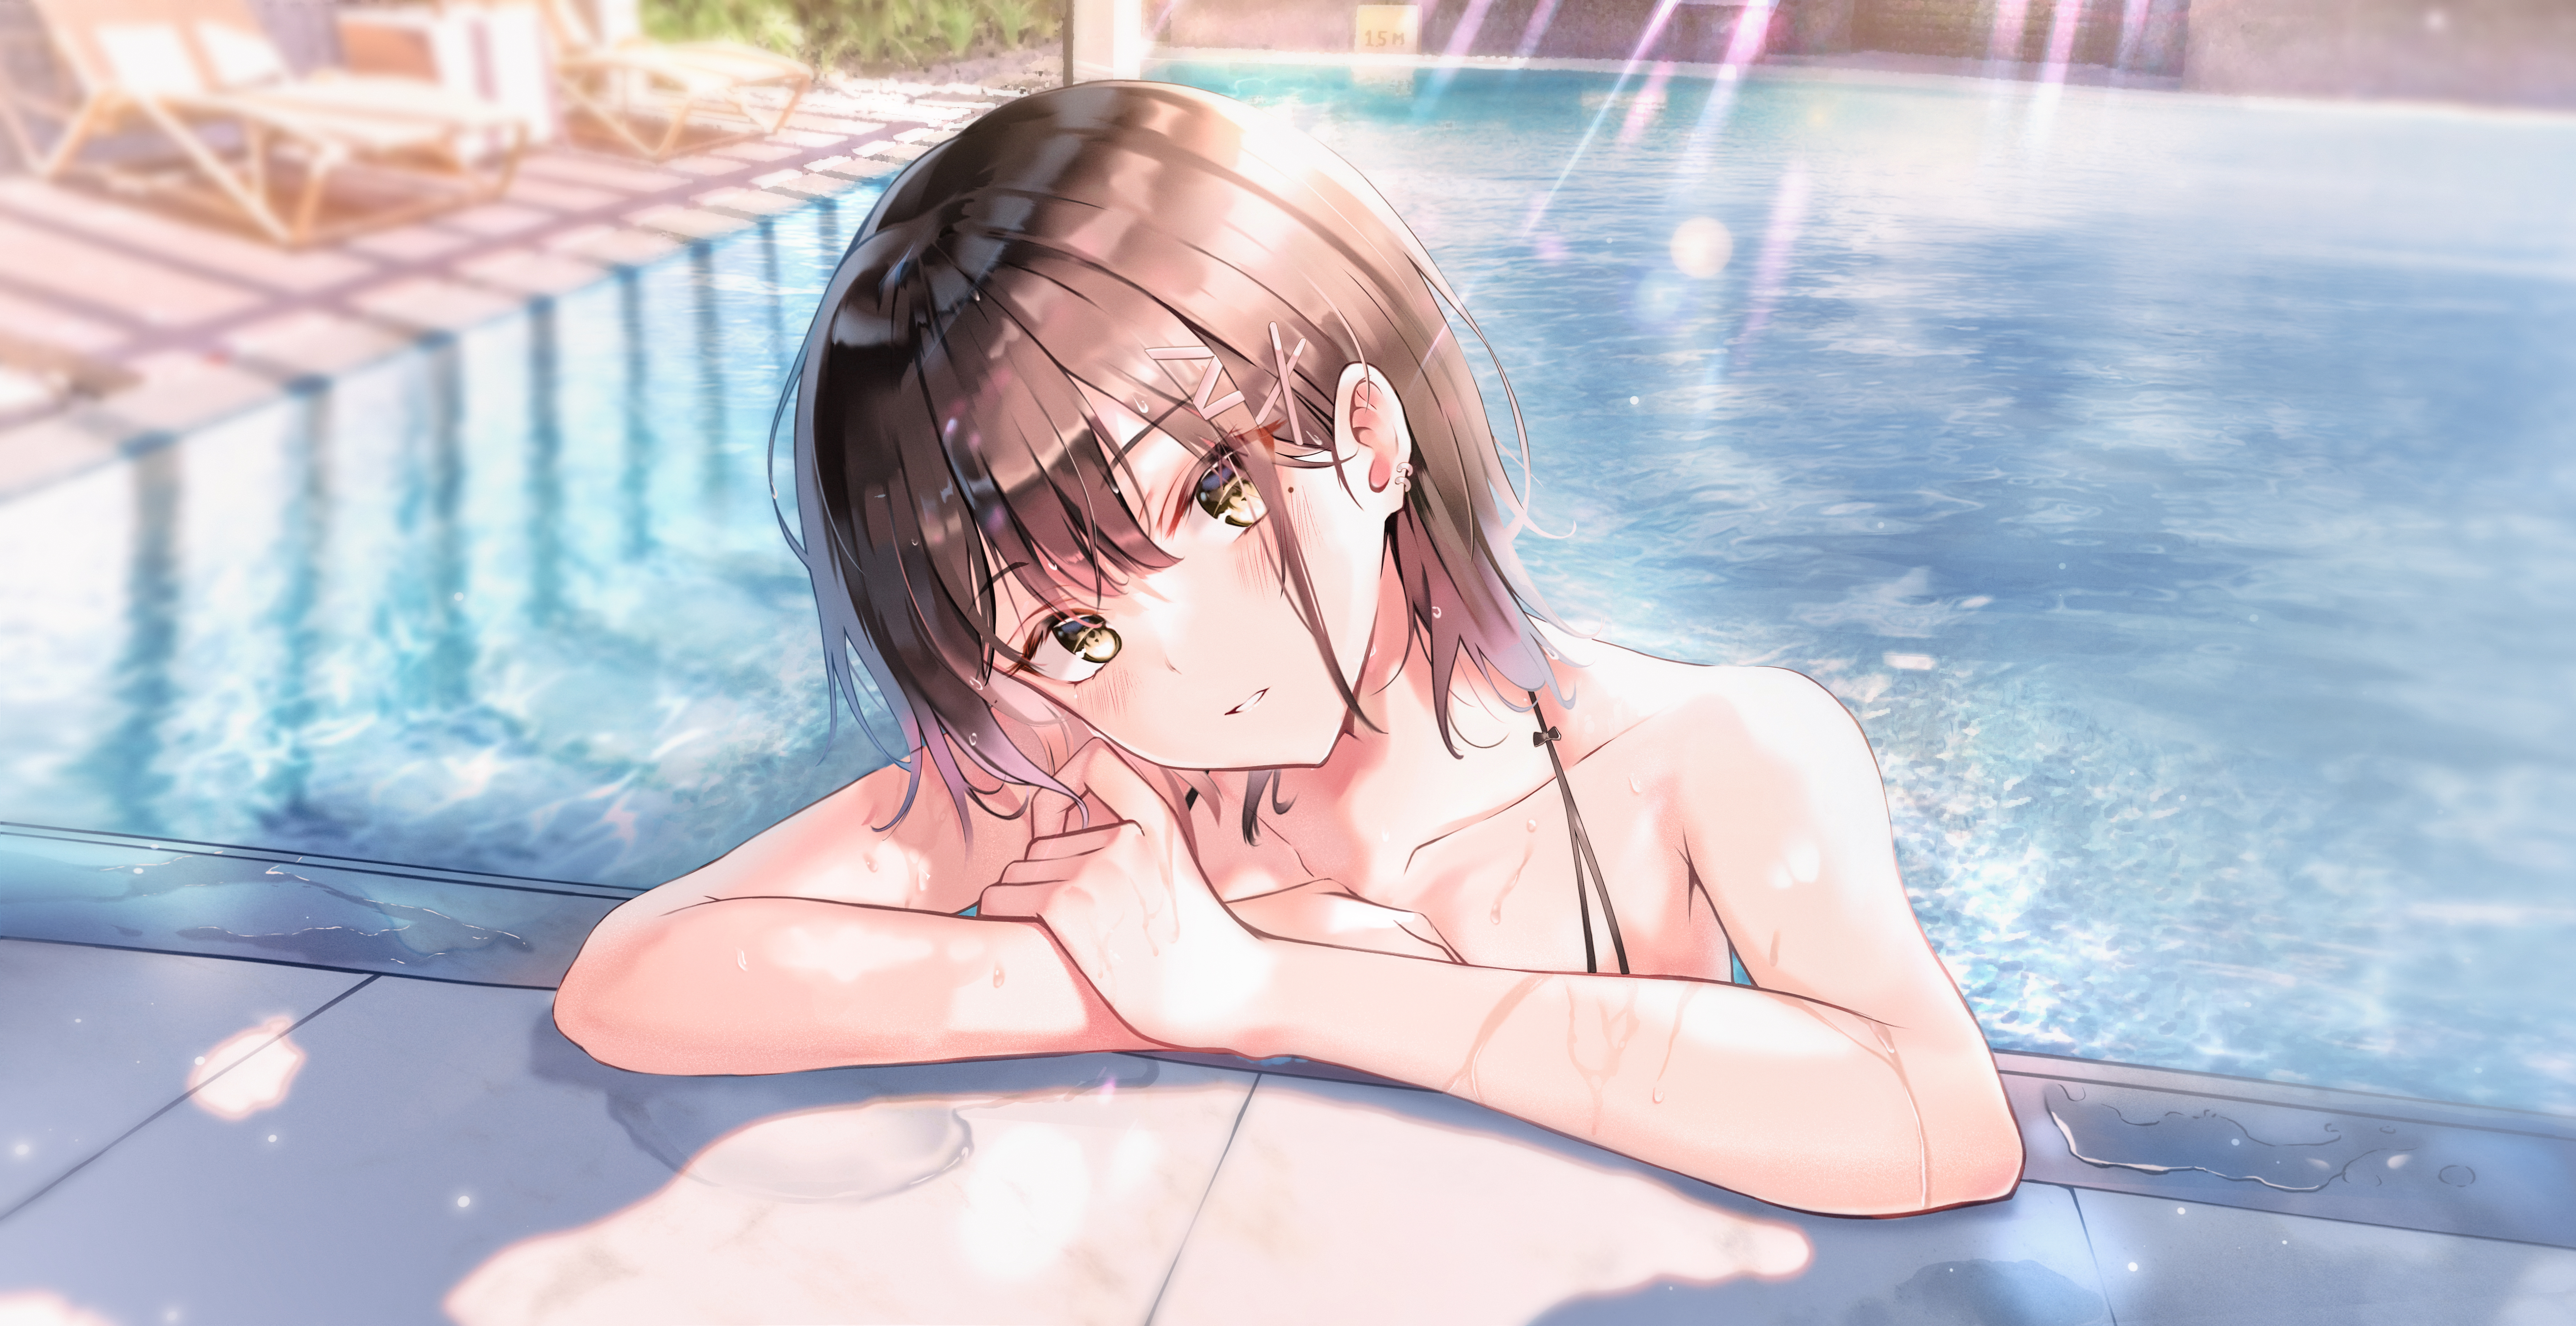 Anime Anime Girls Artwork Looking At Viewer Brown Eyes Brunette Wet Swimming Pool Sion Im10042m 6669x3433